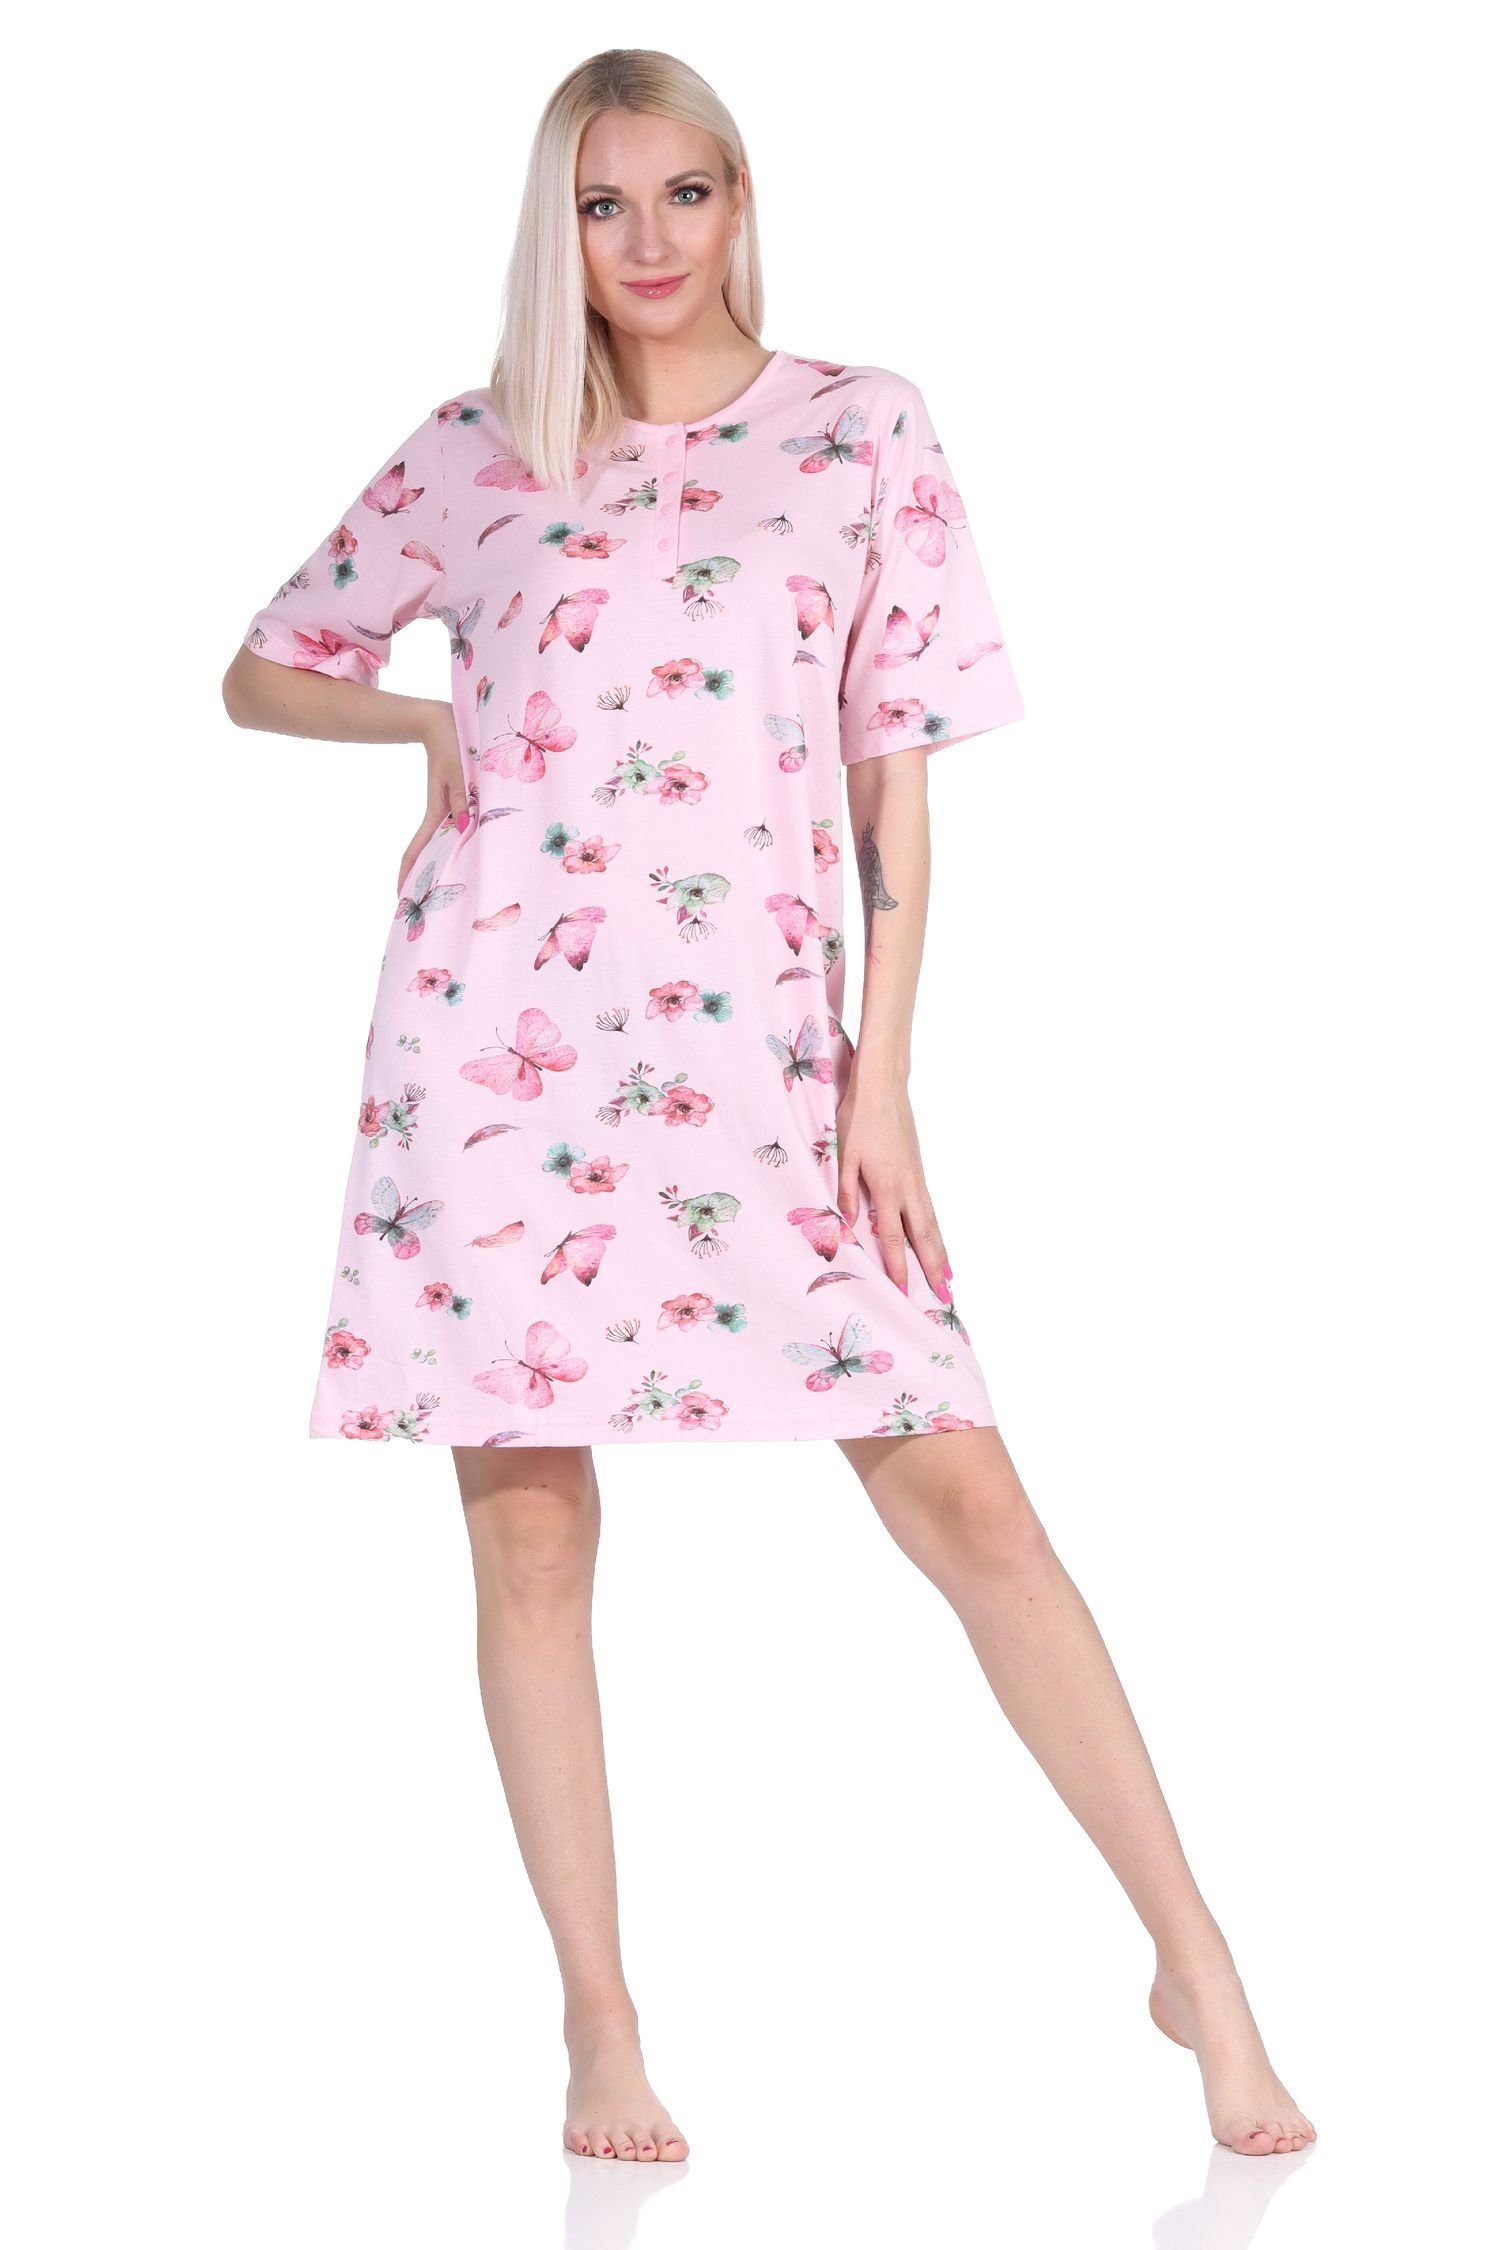 Normann Nachthemd Damen kurzarm Nachthemd in floralem Schmetterlings Print - 122 212 rosa